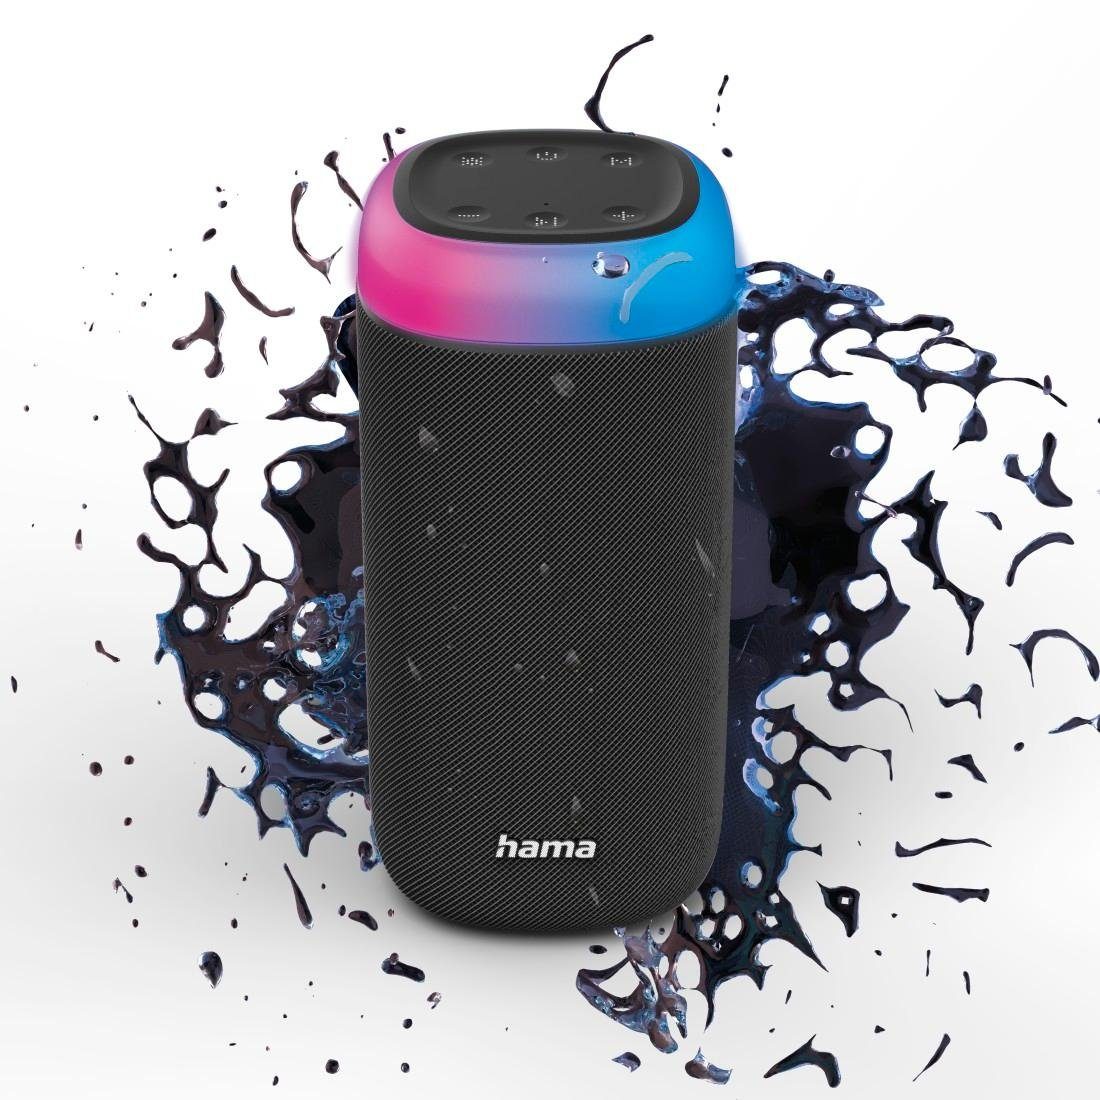 Hama Bluetooth Box Shine 2.0 LED Xtra Bass 360ᵒ Sound spritzwassergeschützt Bluetooth-Lautsprecher (Freisprechanlage,Xtra Bass,360ᵒ Sound) schwarz | Lautsprecher